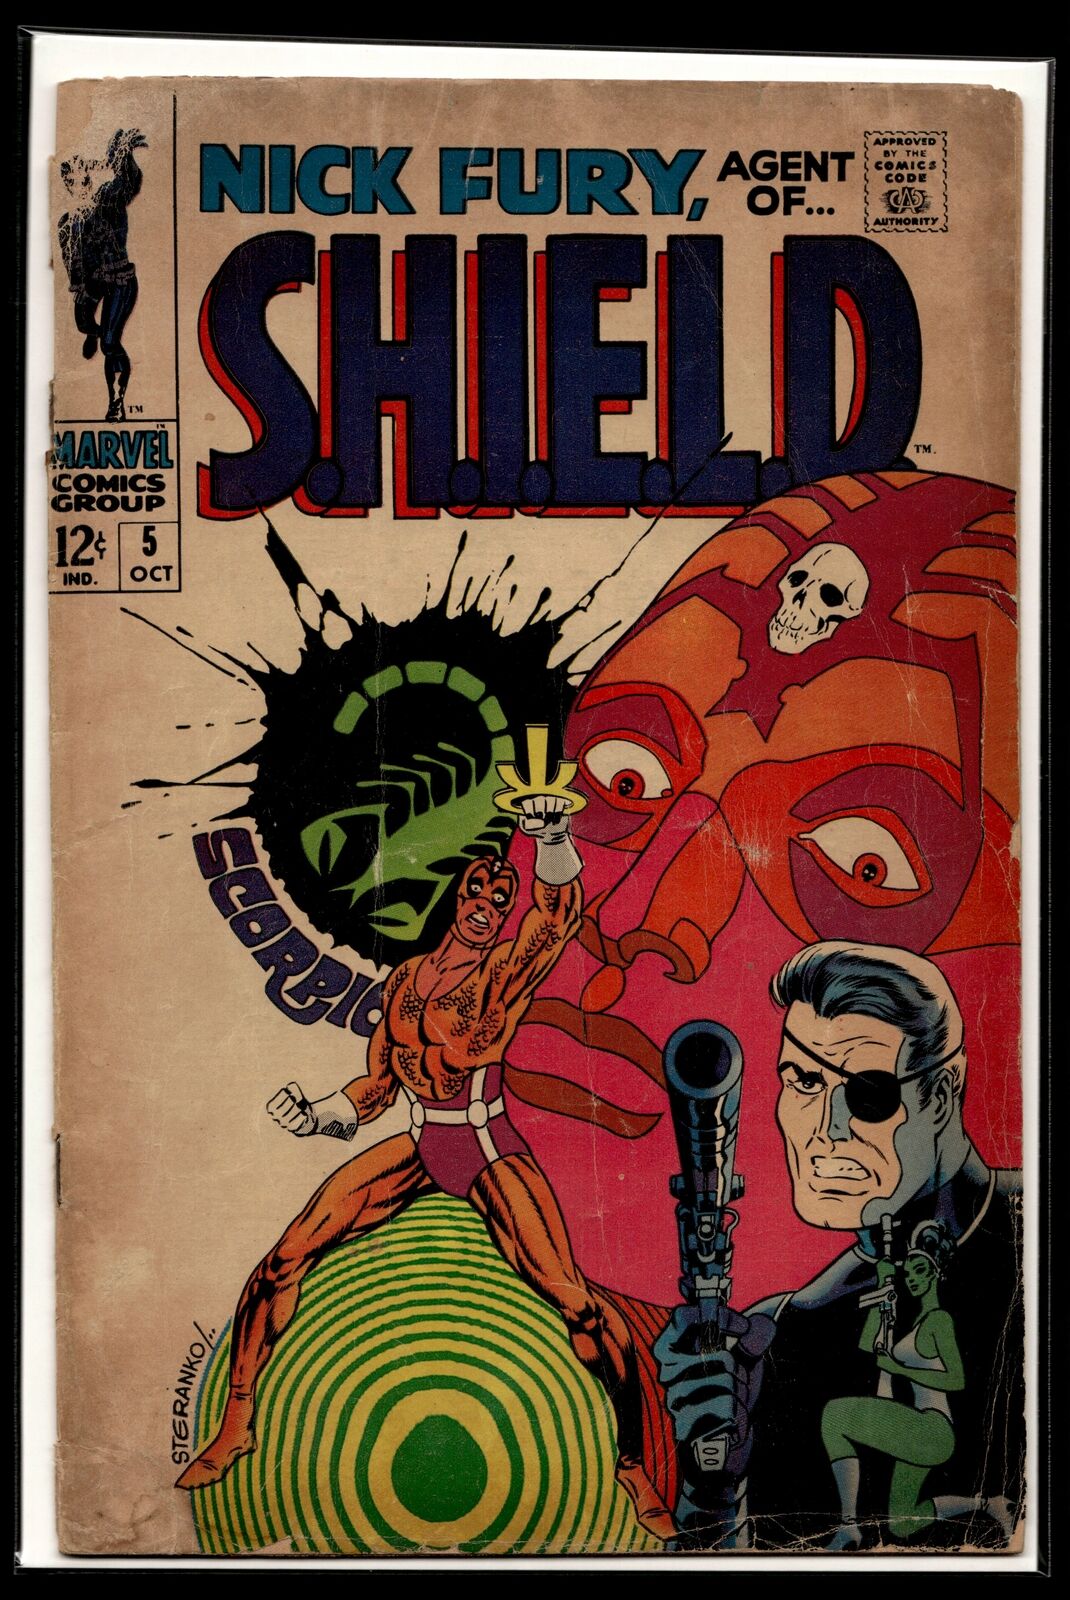 1968 Nick Fury Agent of SHIELD #5 Marvel Comic